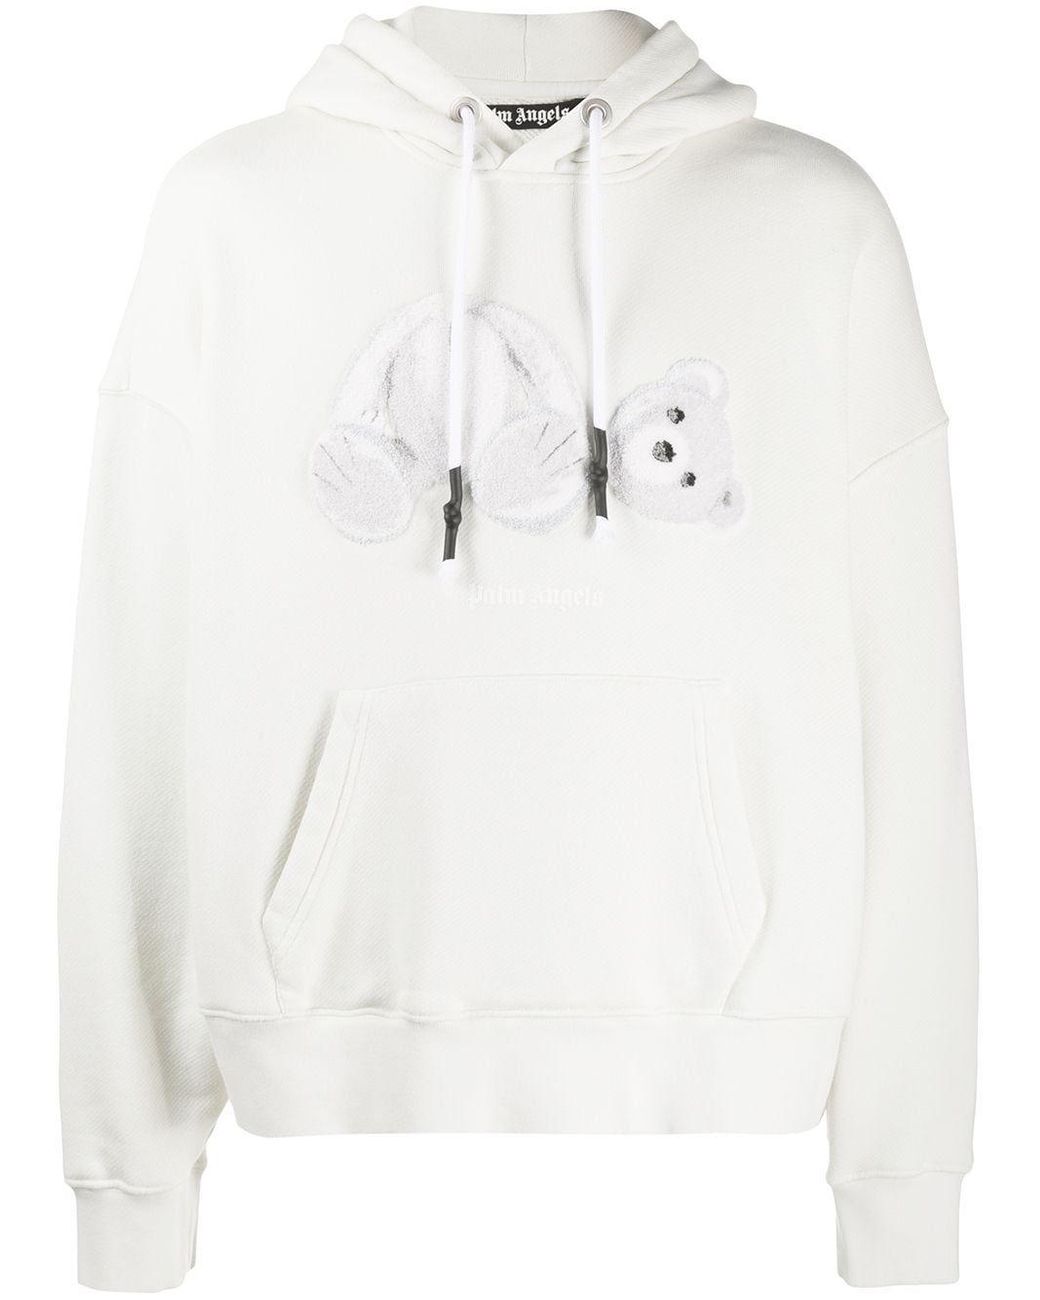 Palm Angels Cotton Teddy Bear Hooded Sweatshirt in White for Men - Lyst